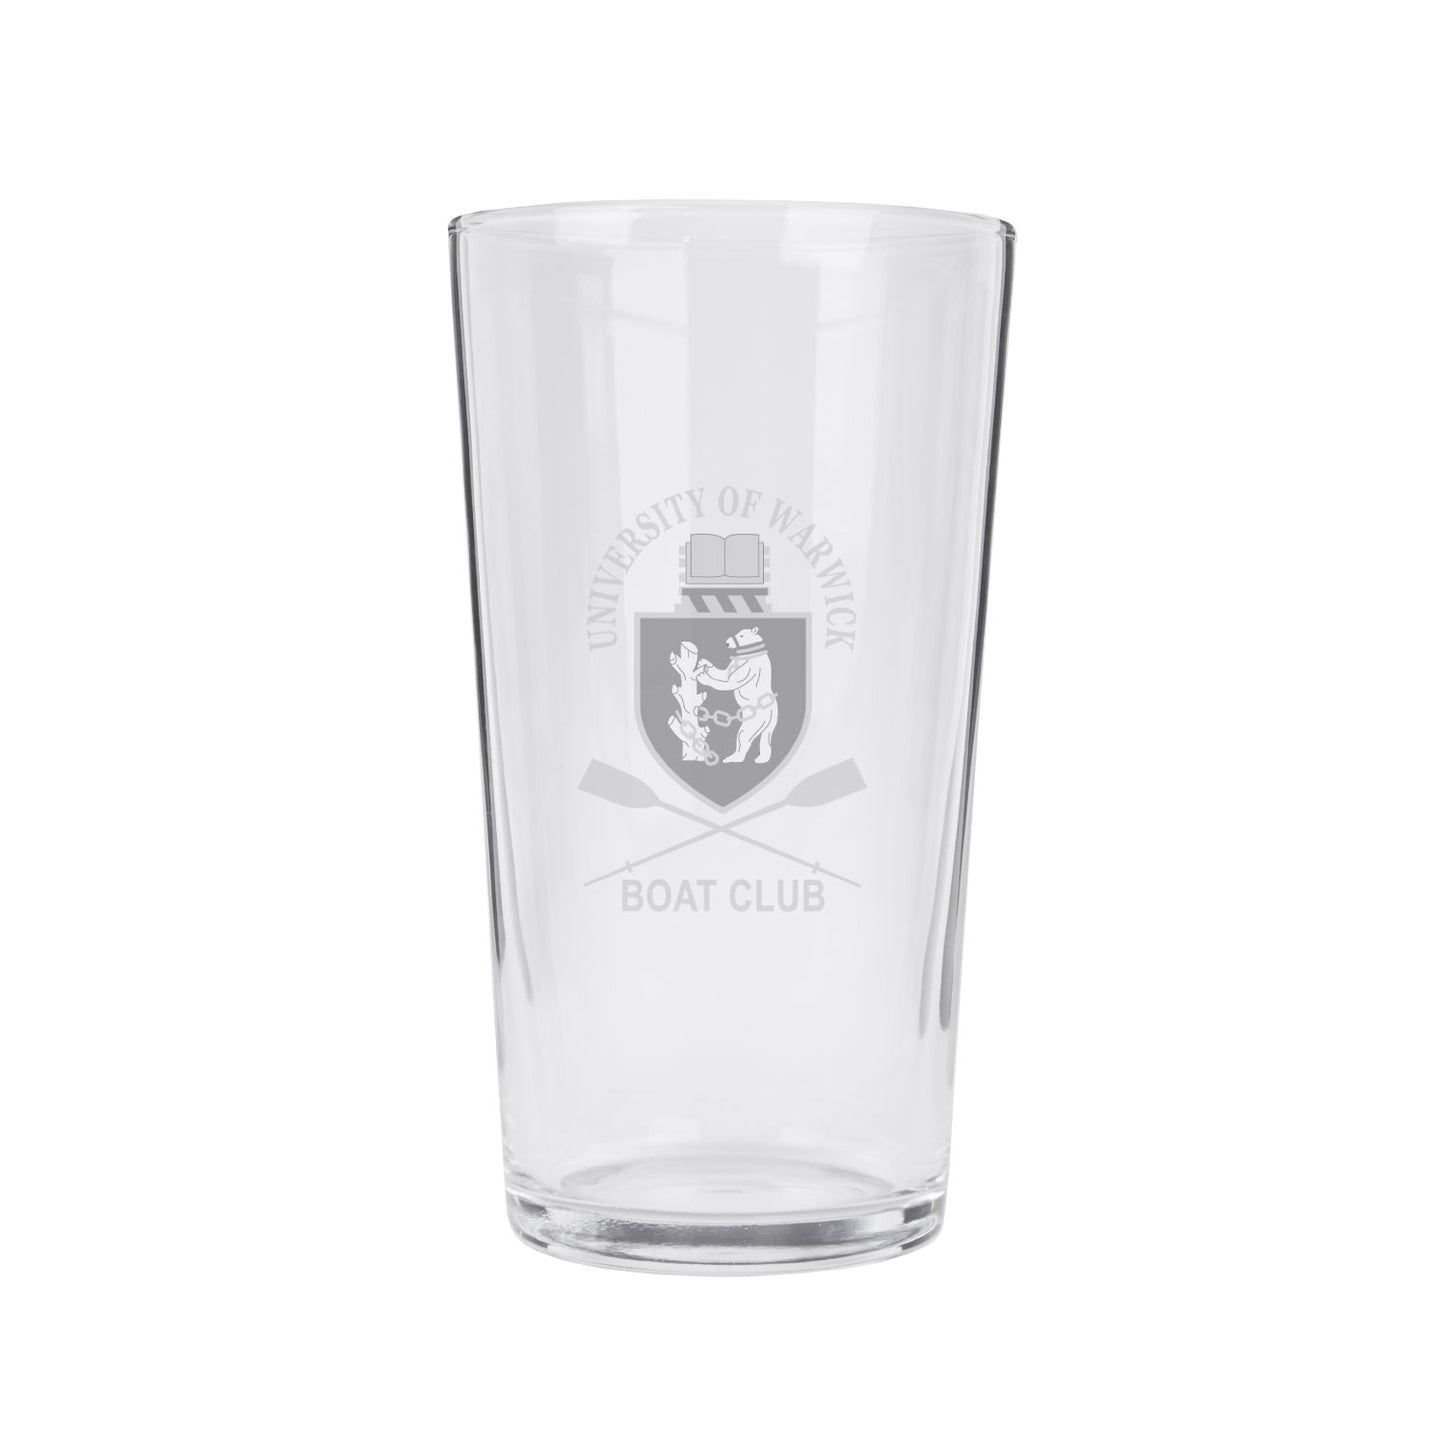 University of Warwick Boat Club Pint Glass